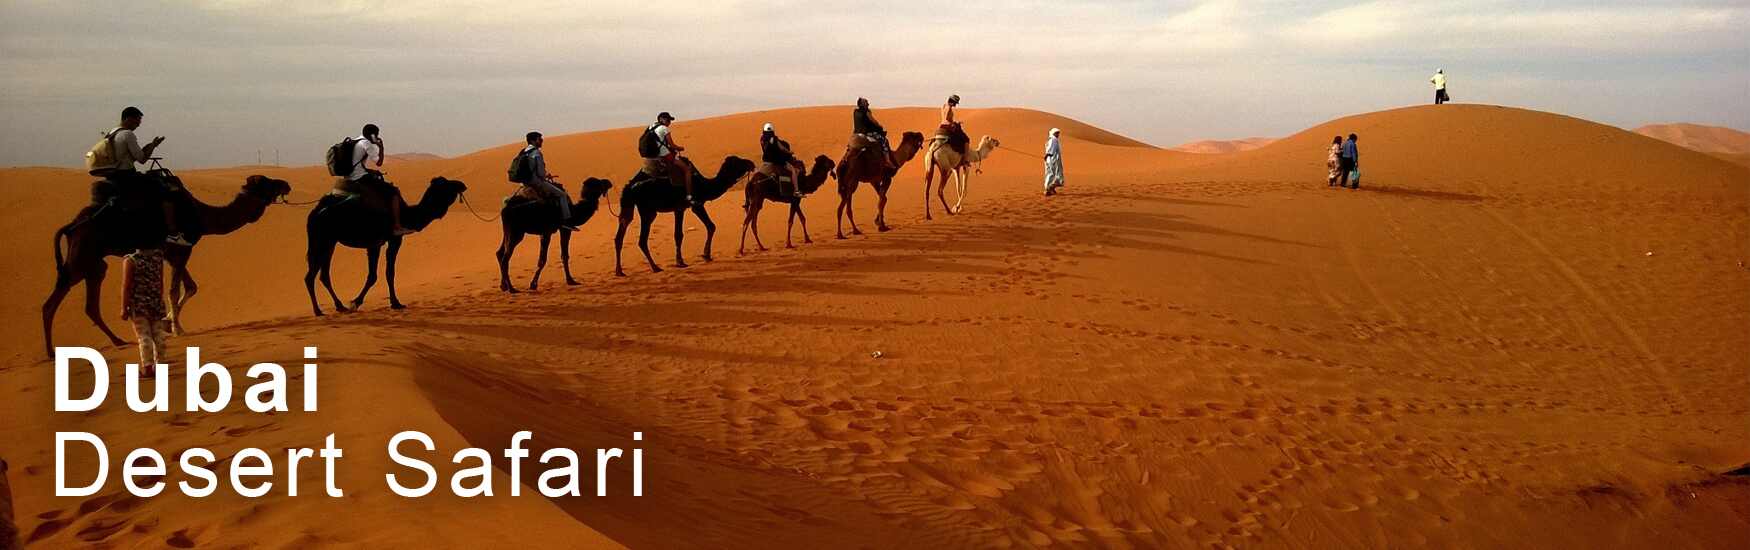 Dubai Desert Safari Tour Package